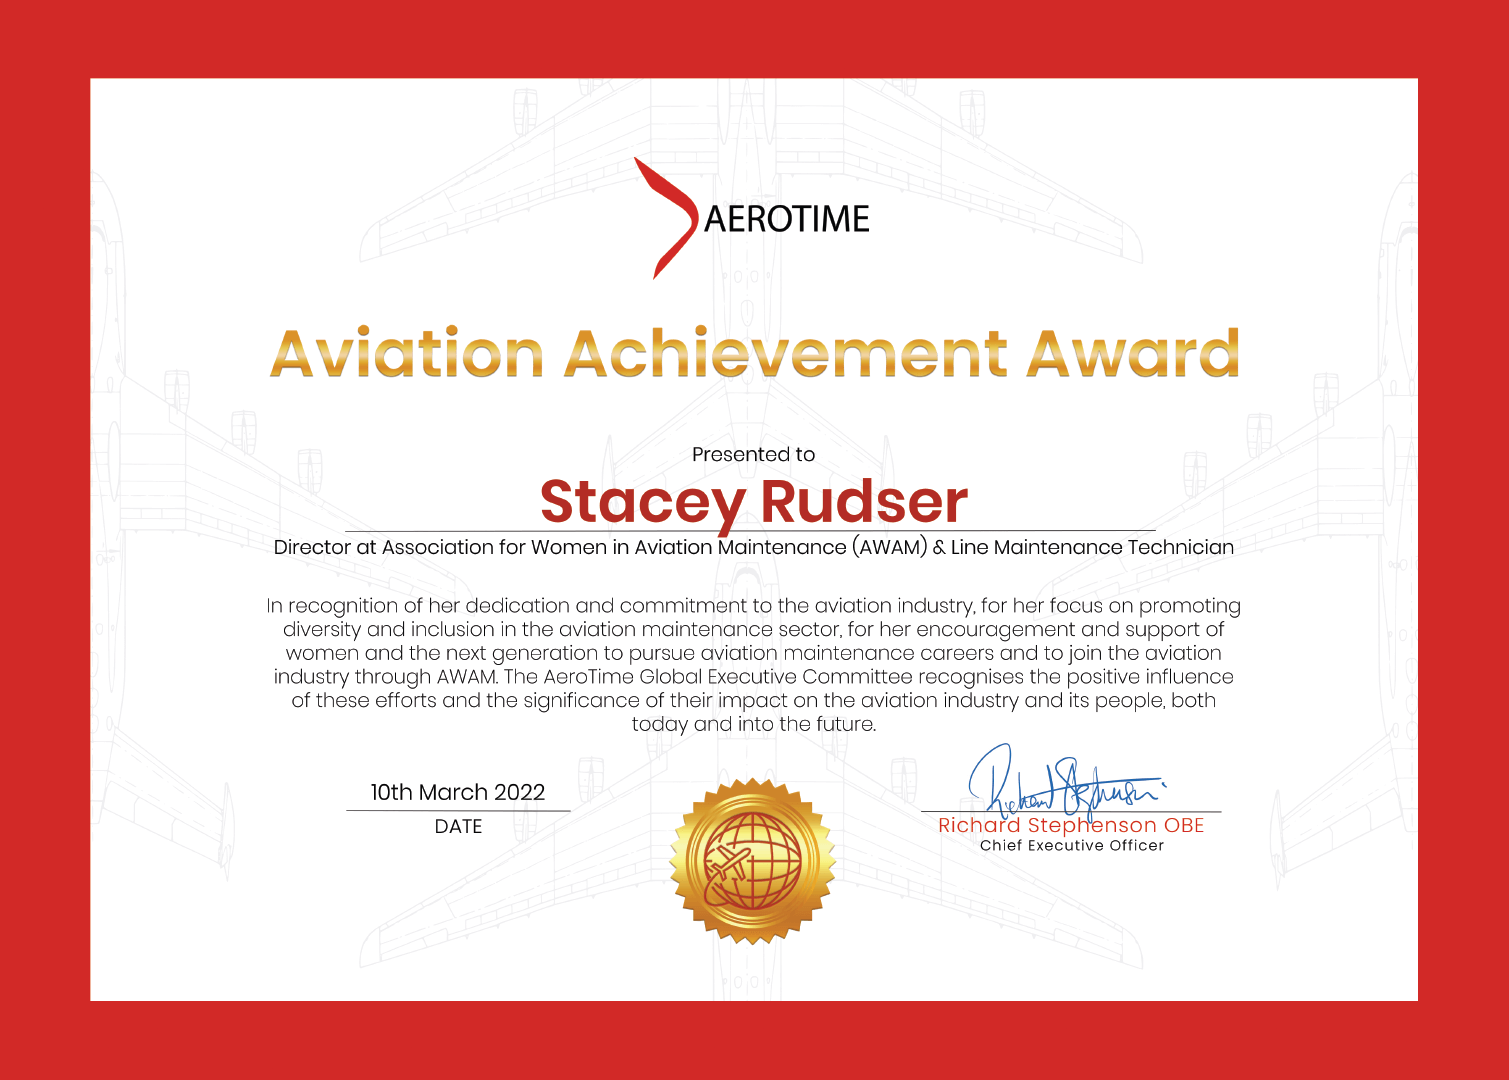 Stacey Rudser, AeroTime Aviation Achievement Award